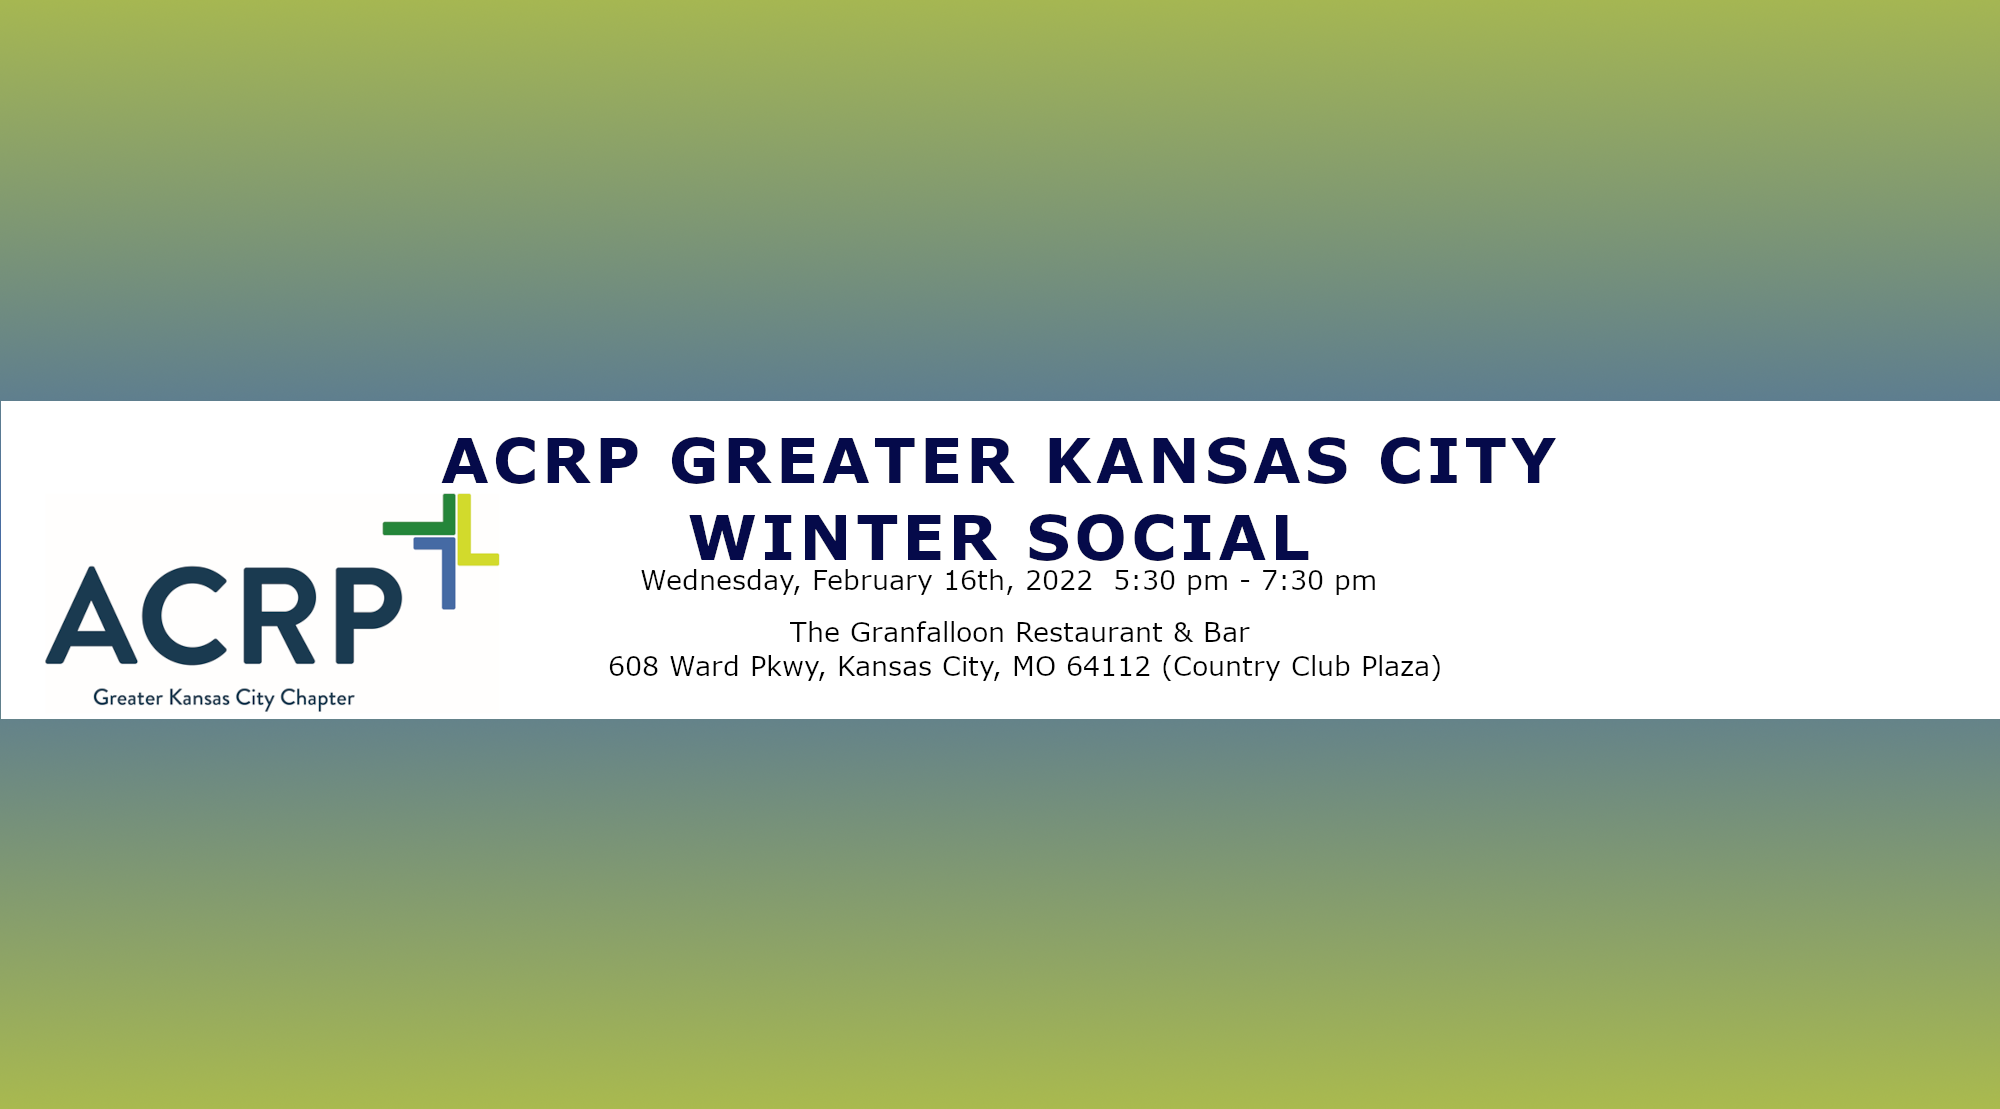 ACRP GREATER KANSAS CITY WINTER SOCIAL